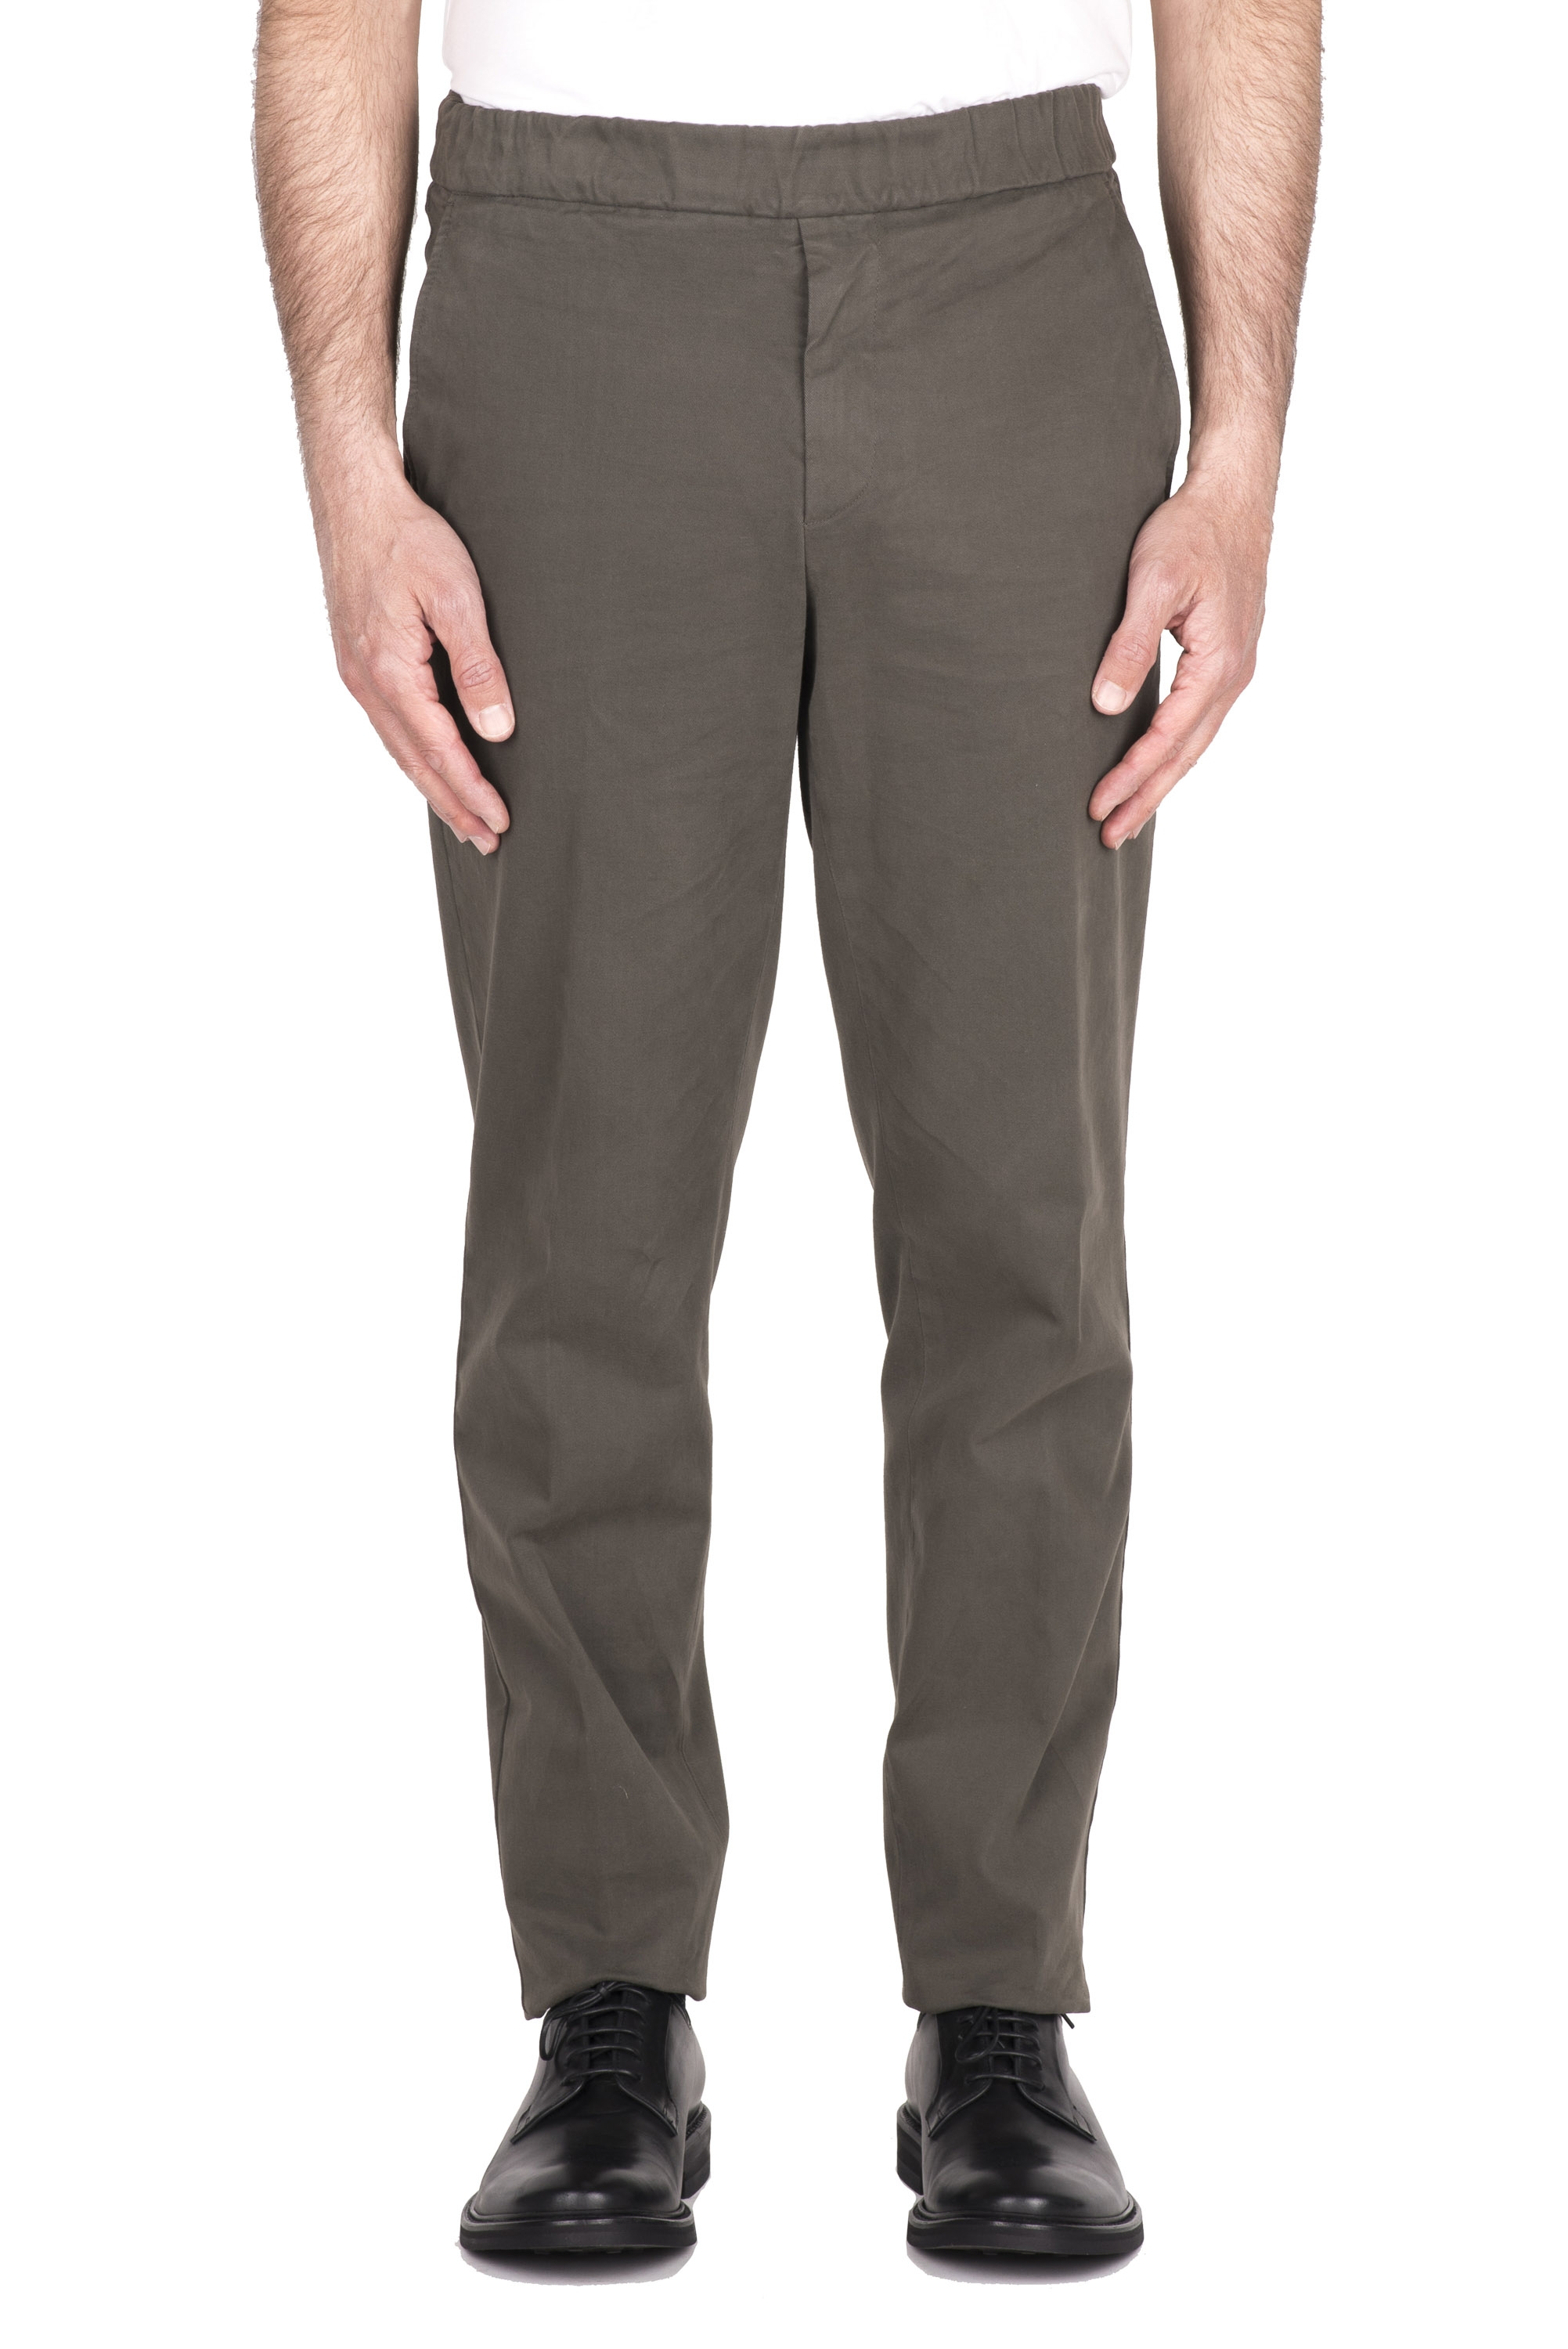 SBU 03439_2021AW Pantalón confort de algodón elástico marrón 01